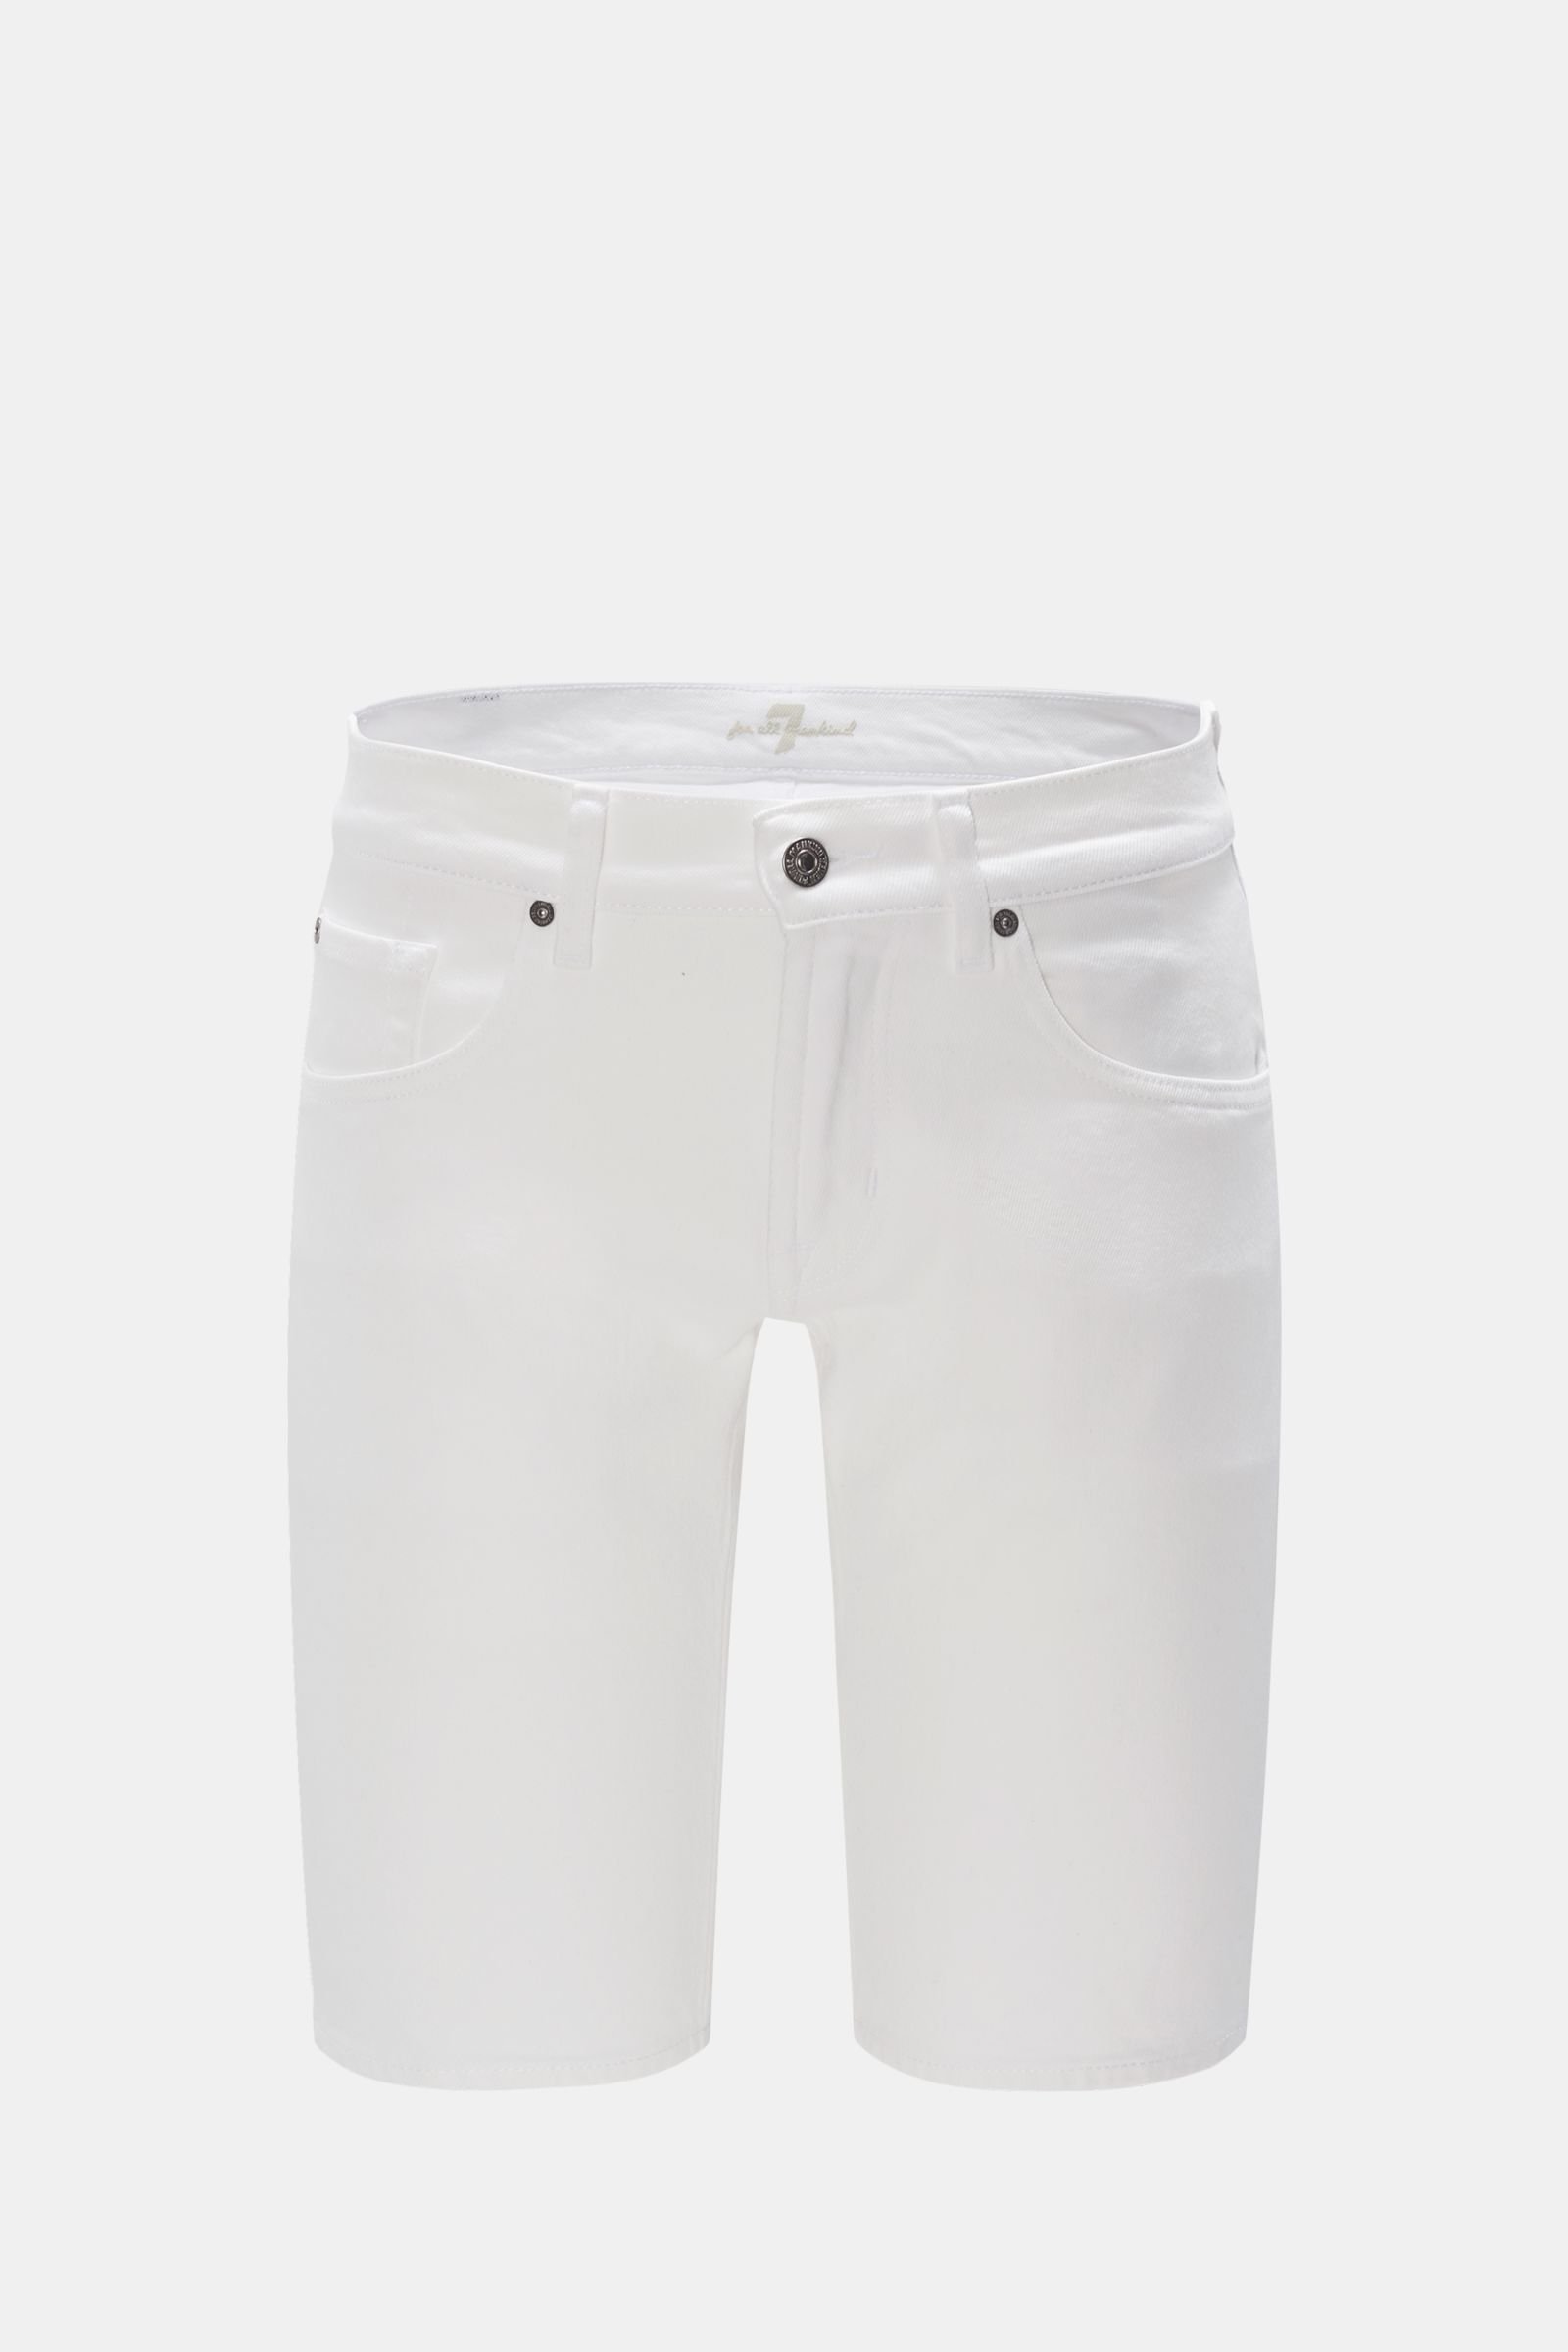 Jeans Bermuda shorts white